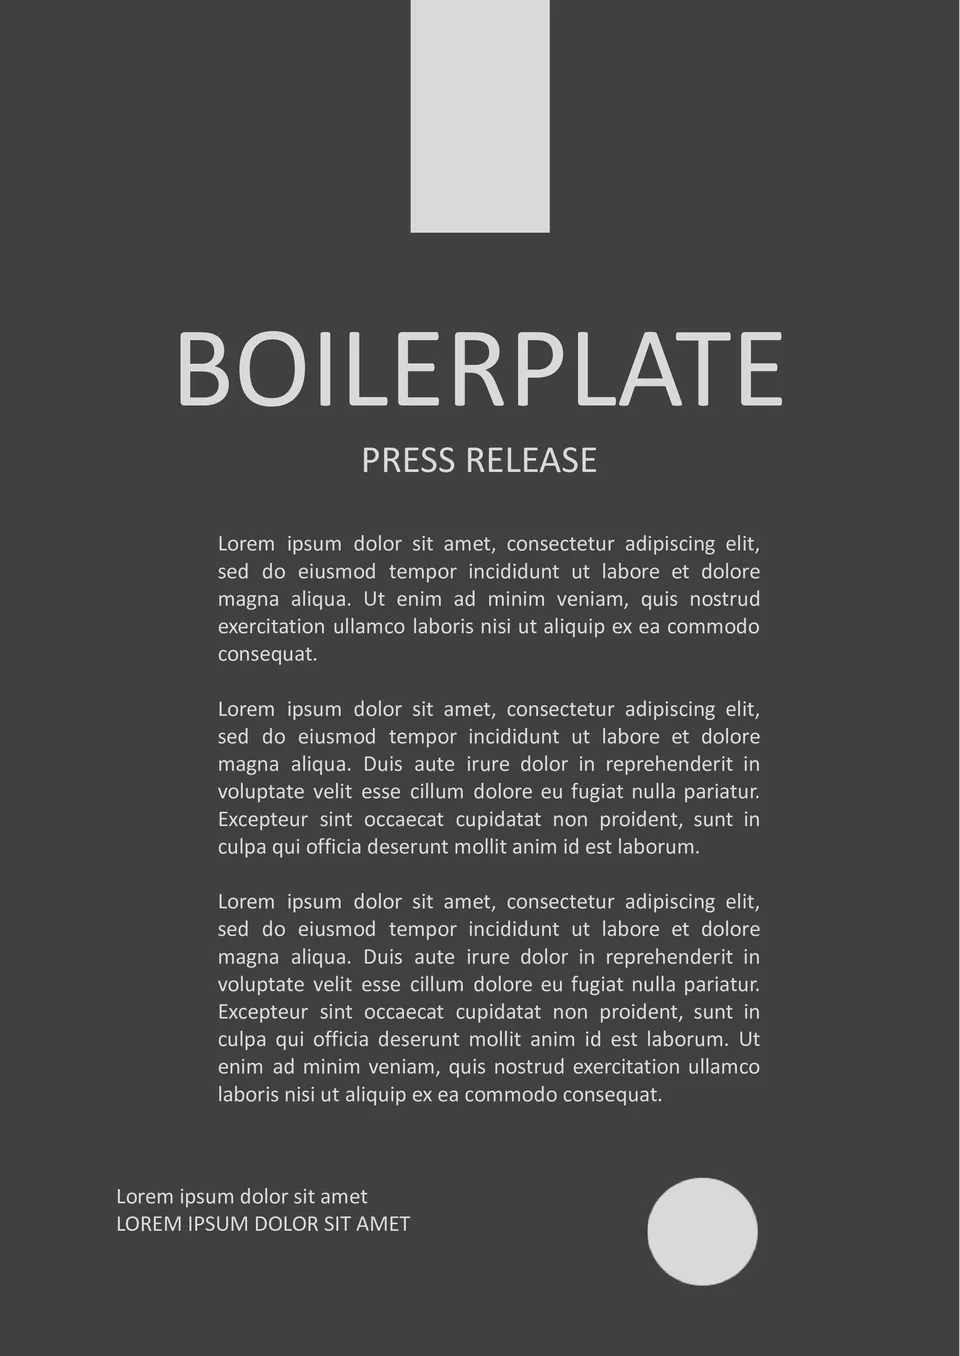 Boilerplate Press Release Template